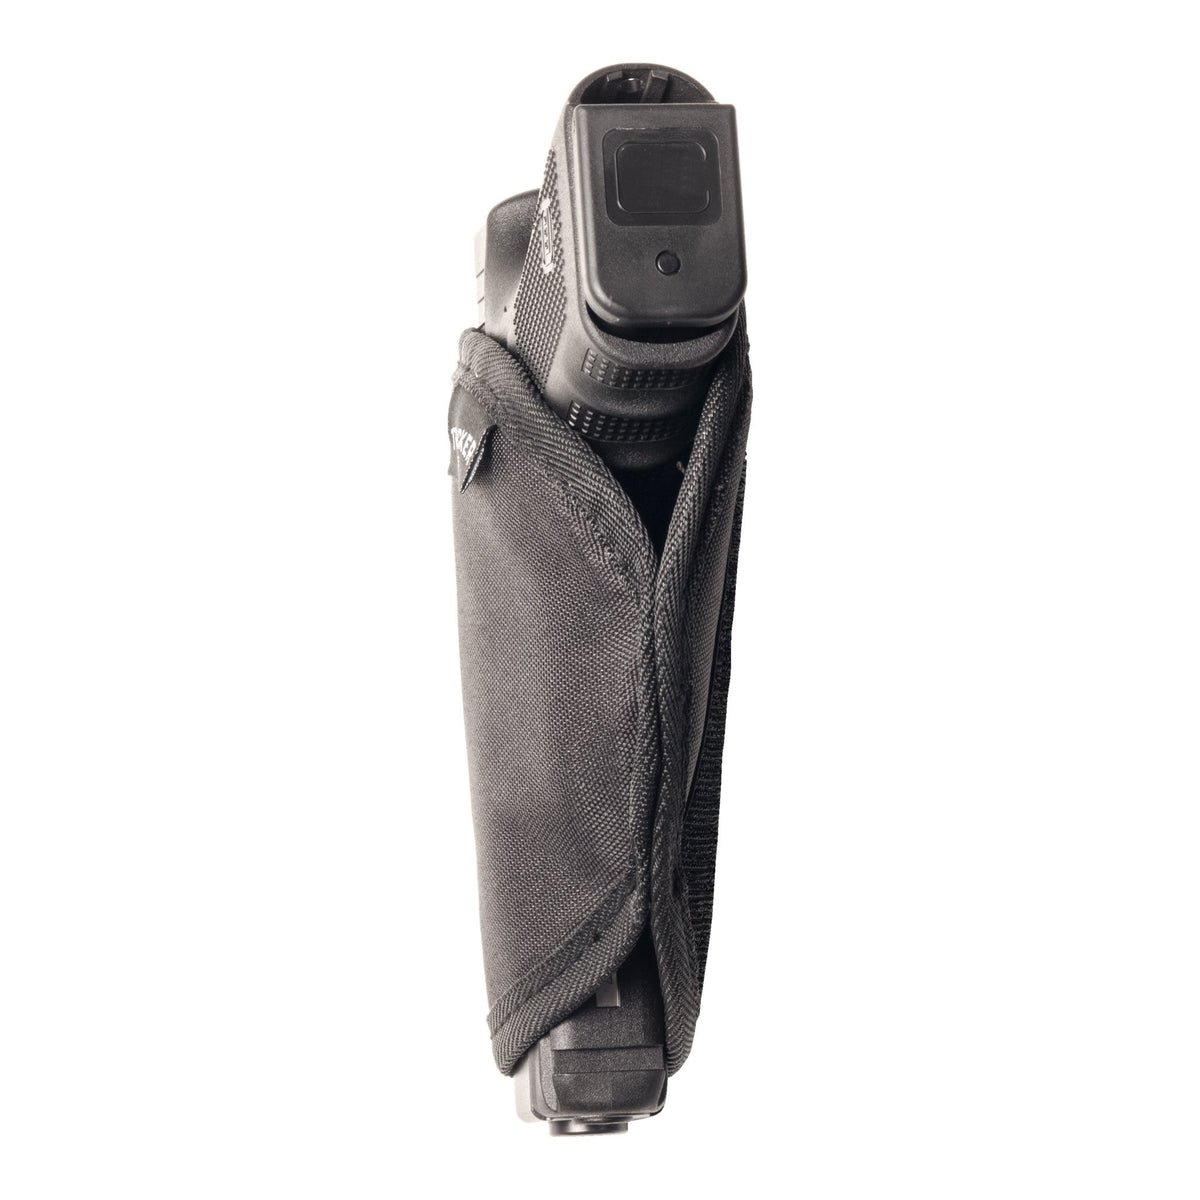 Accessories - Tracker H01 Pistol Pocket / Holster / Pouch